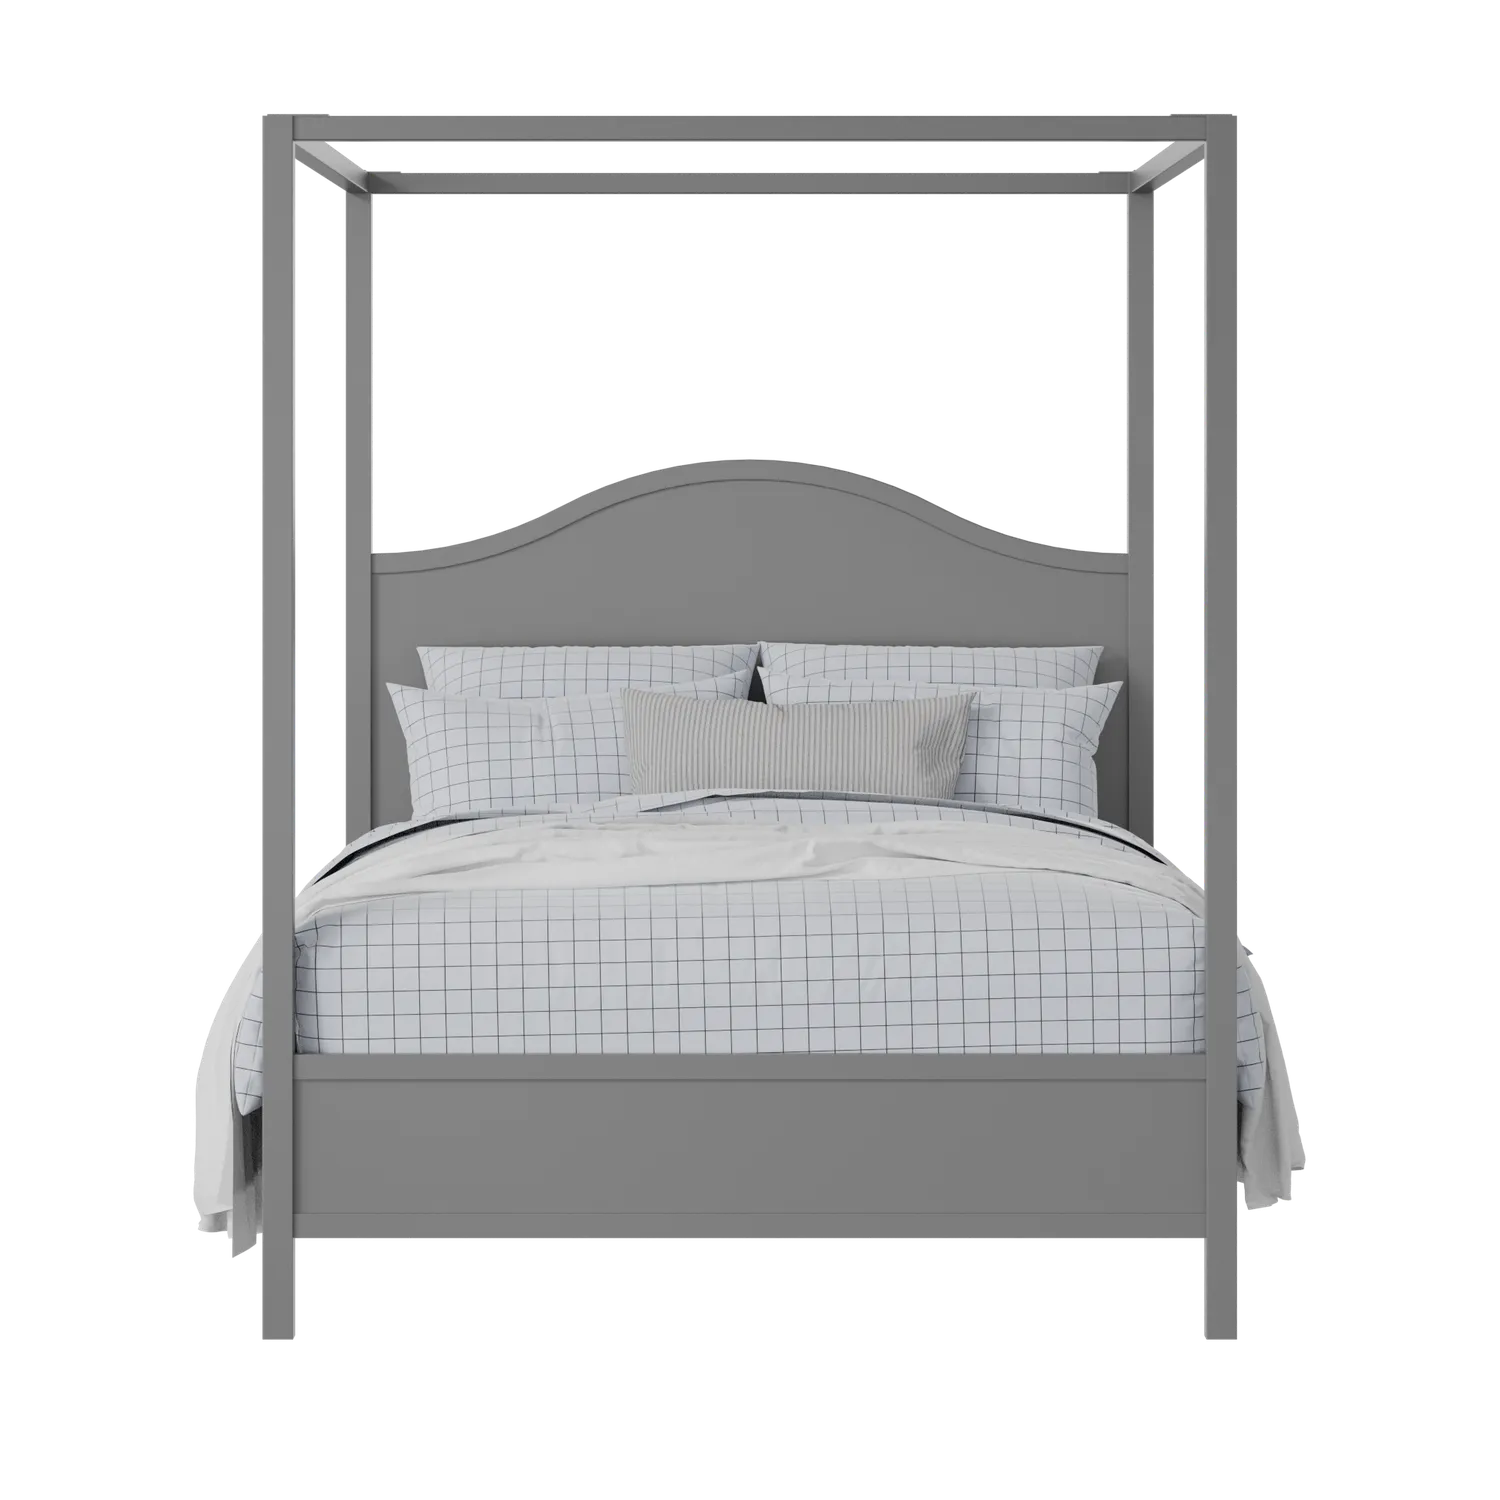 Coleridge Slim painted wood bed in grey with Juno mattress